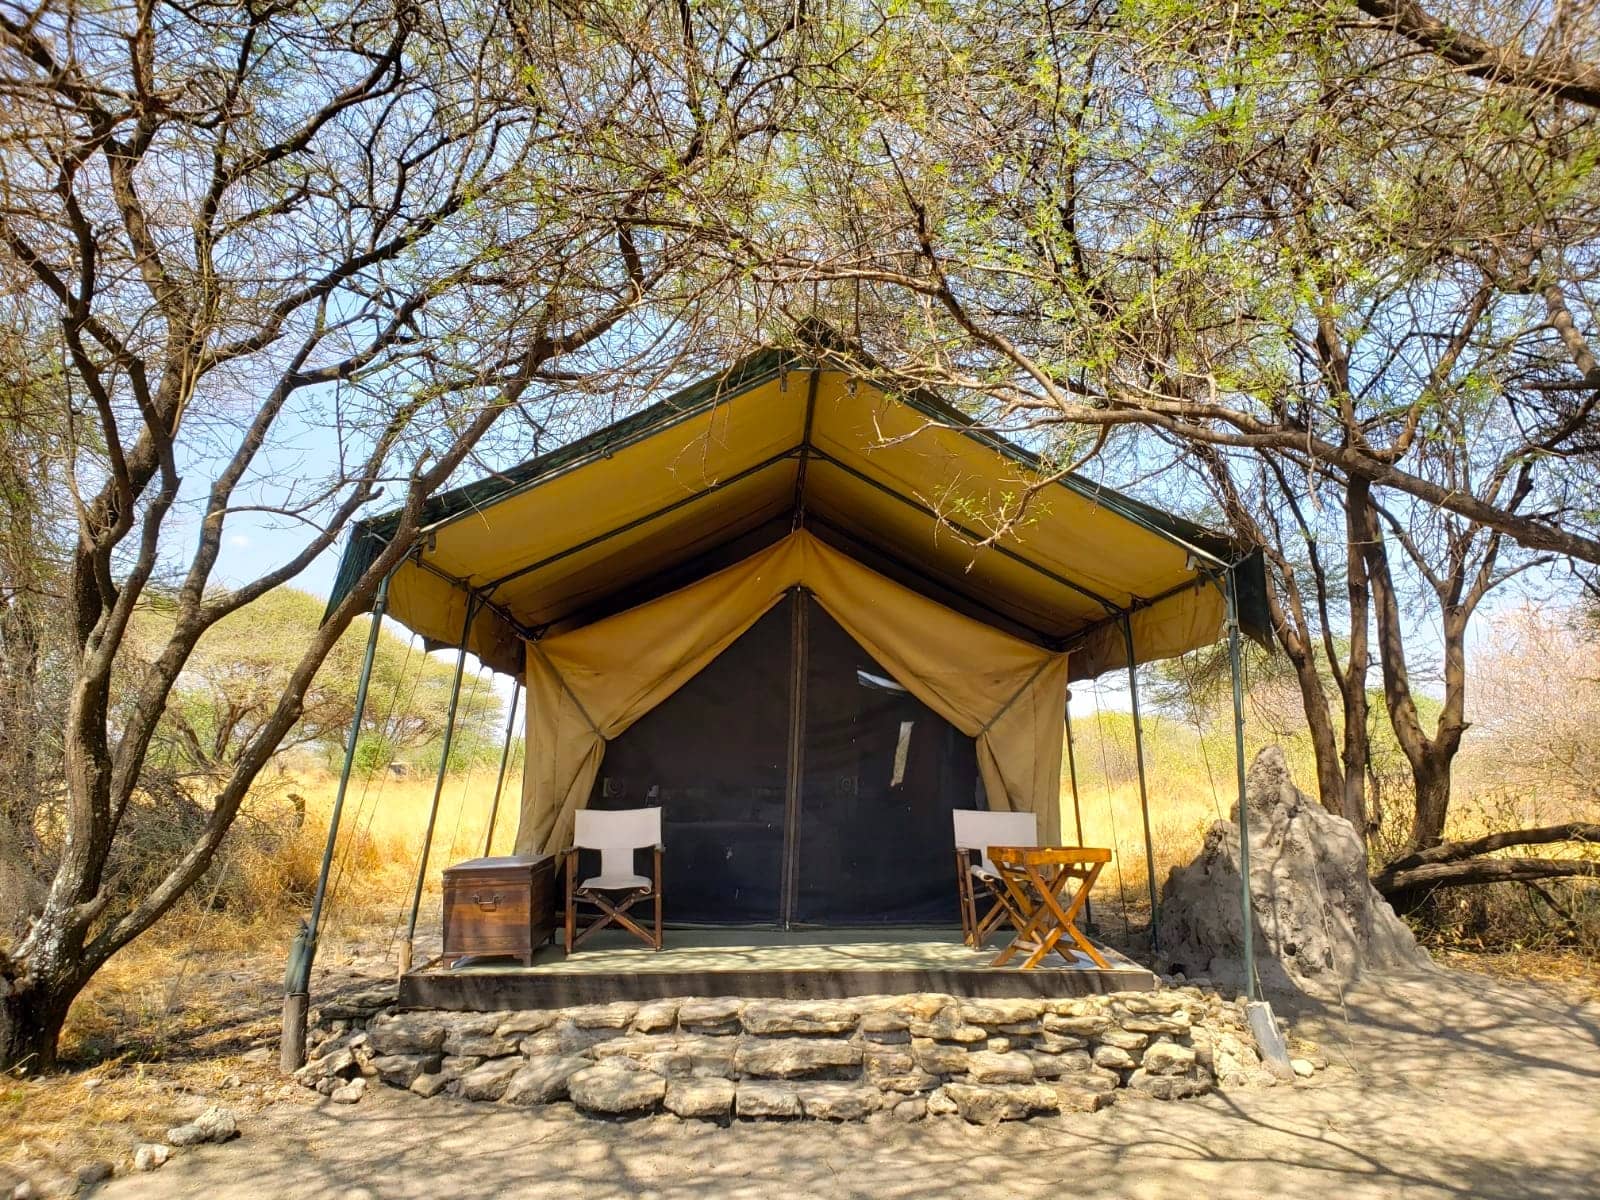 A safe camping safari set up in Tanzania